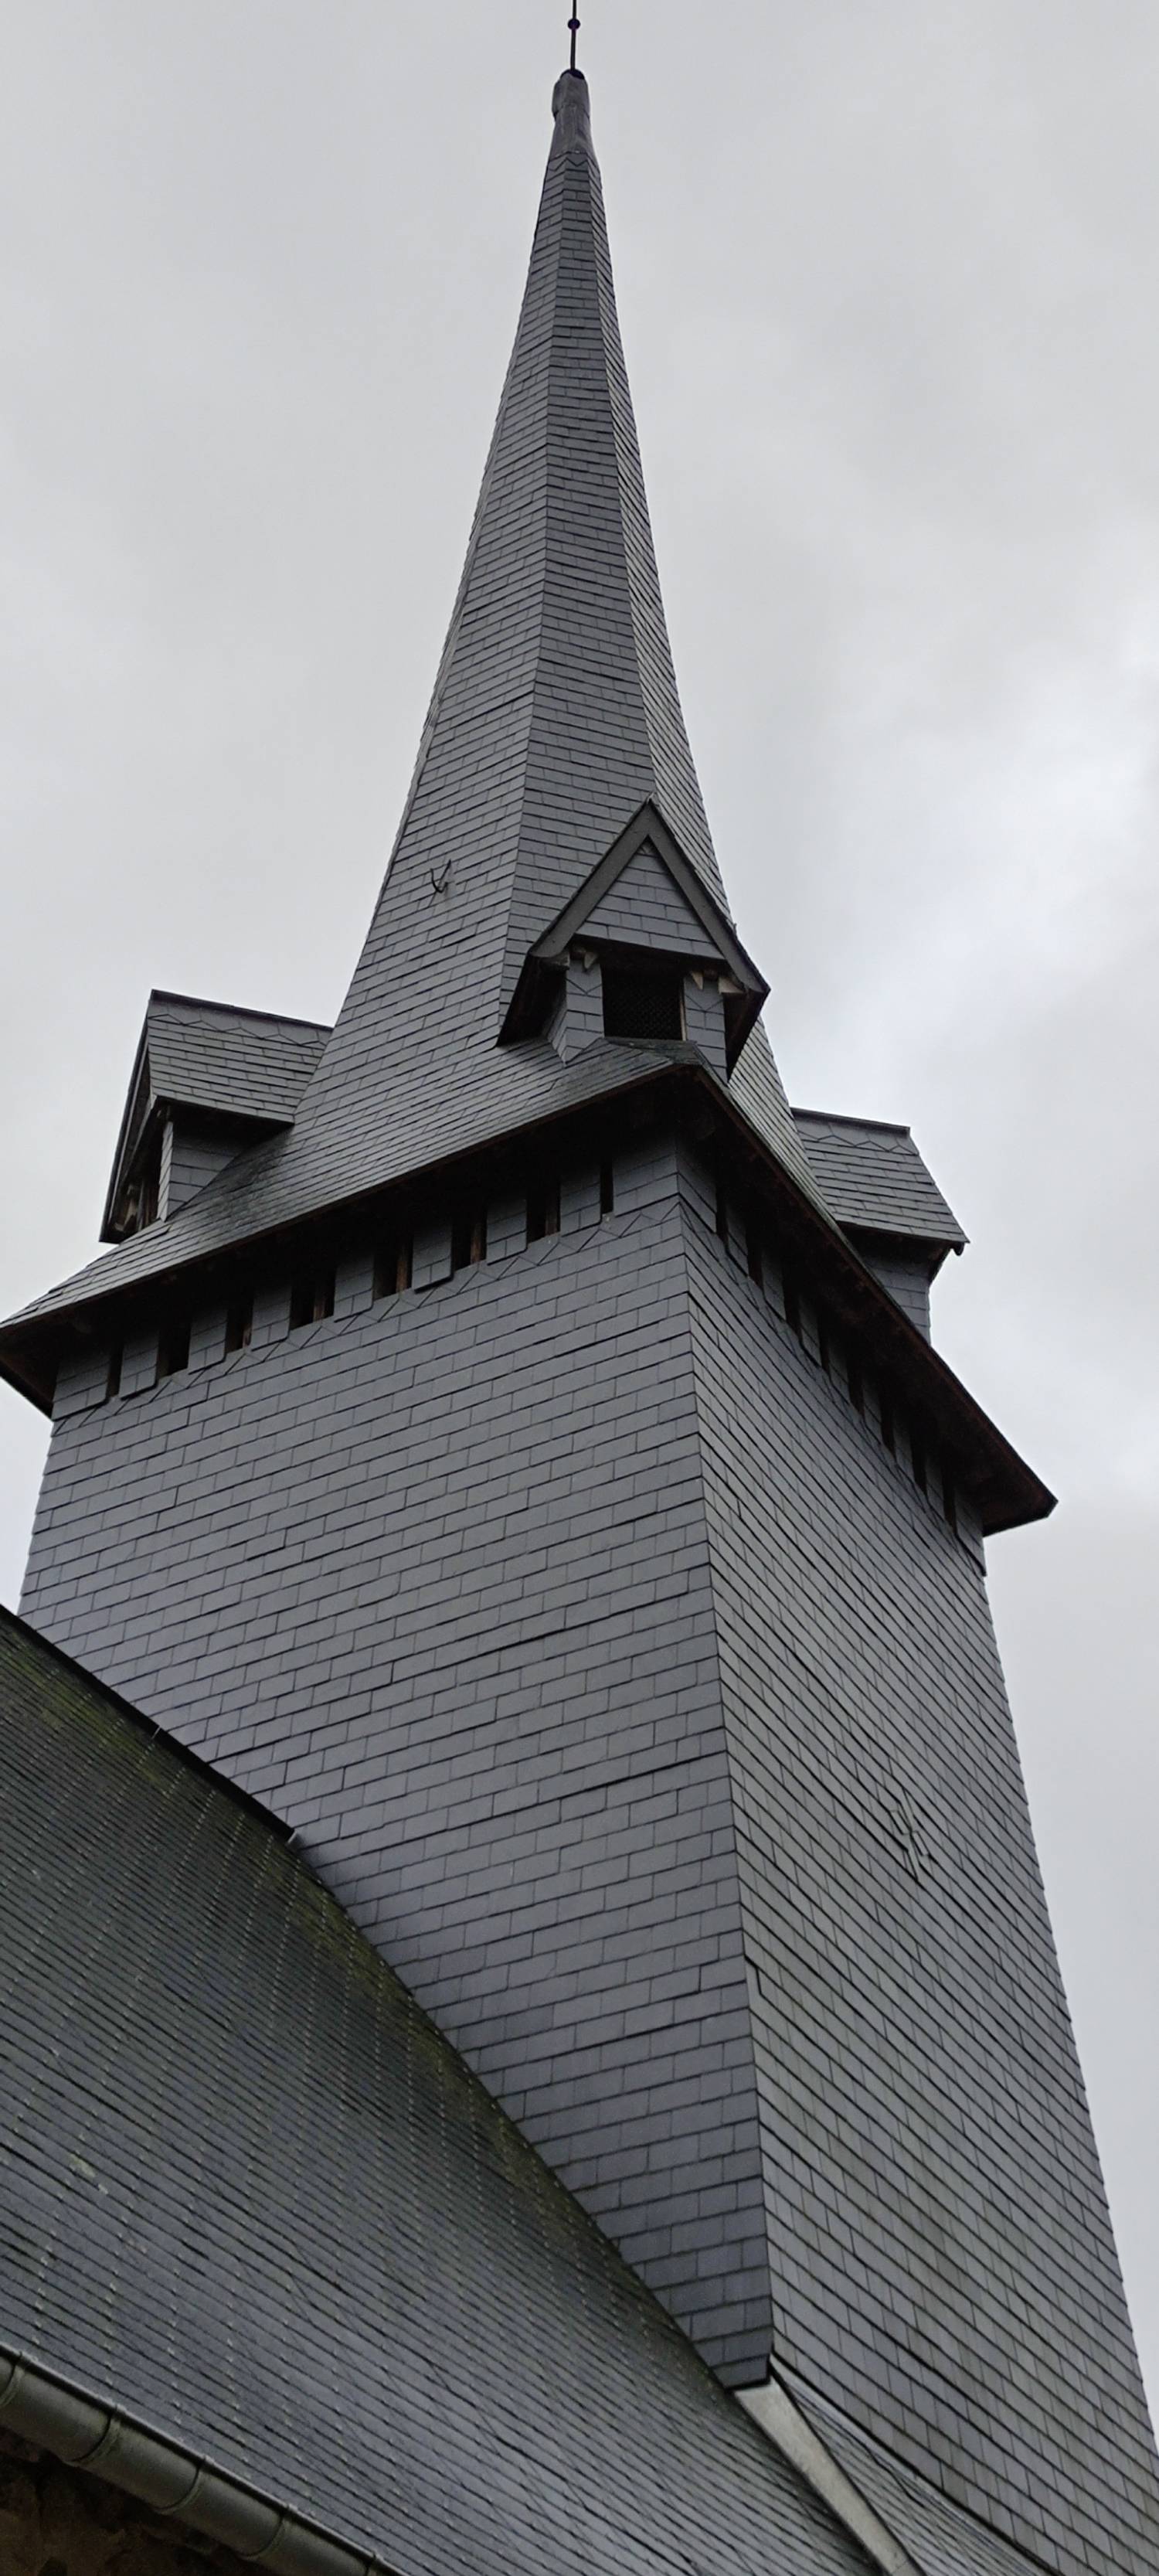 La Roque-Baignard (14) Église Saint-Martin